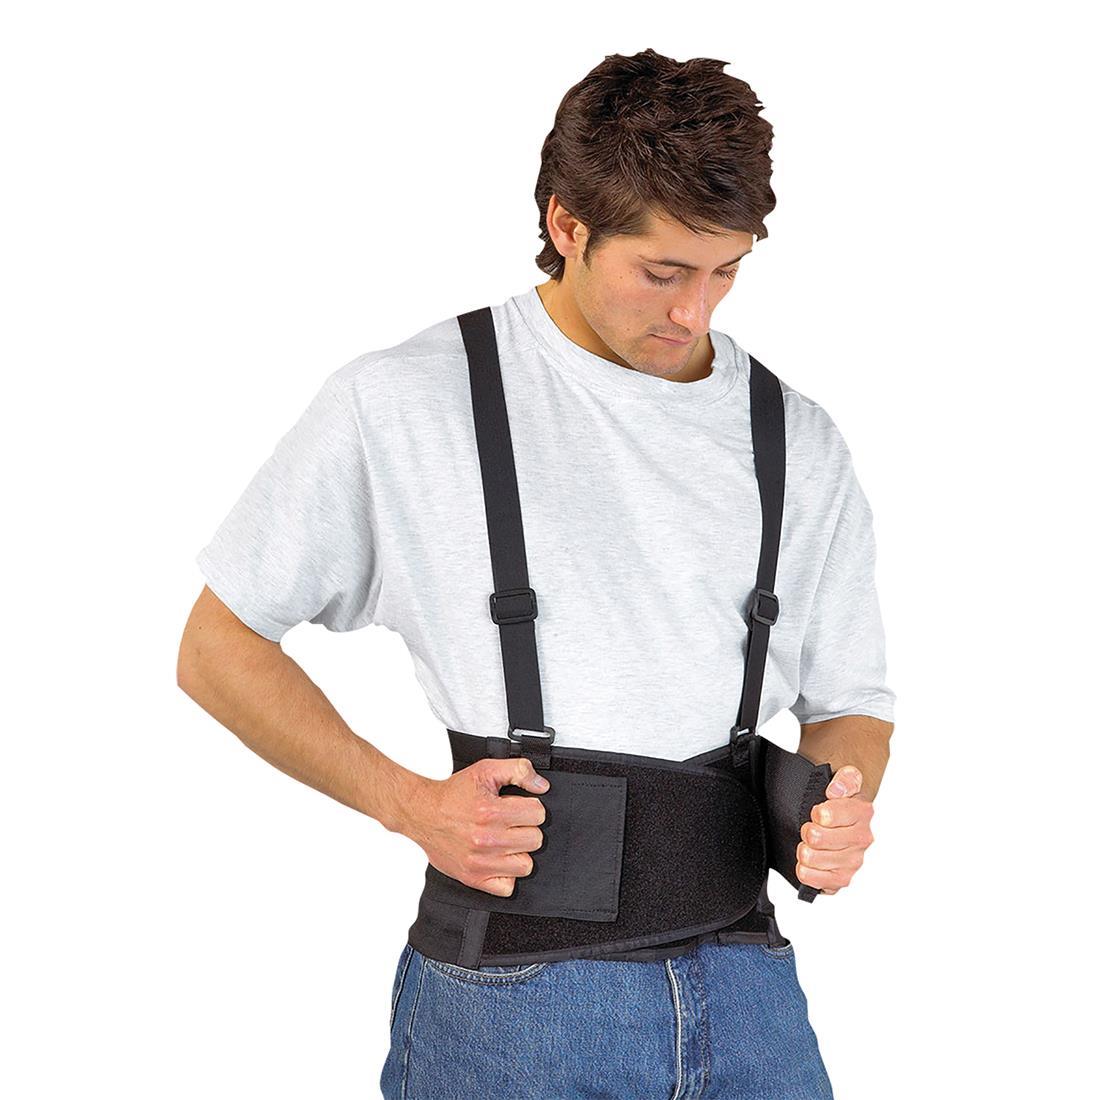 Portwest adjustable lower back, abdomen and lumbar support belt #PW80